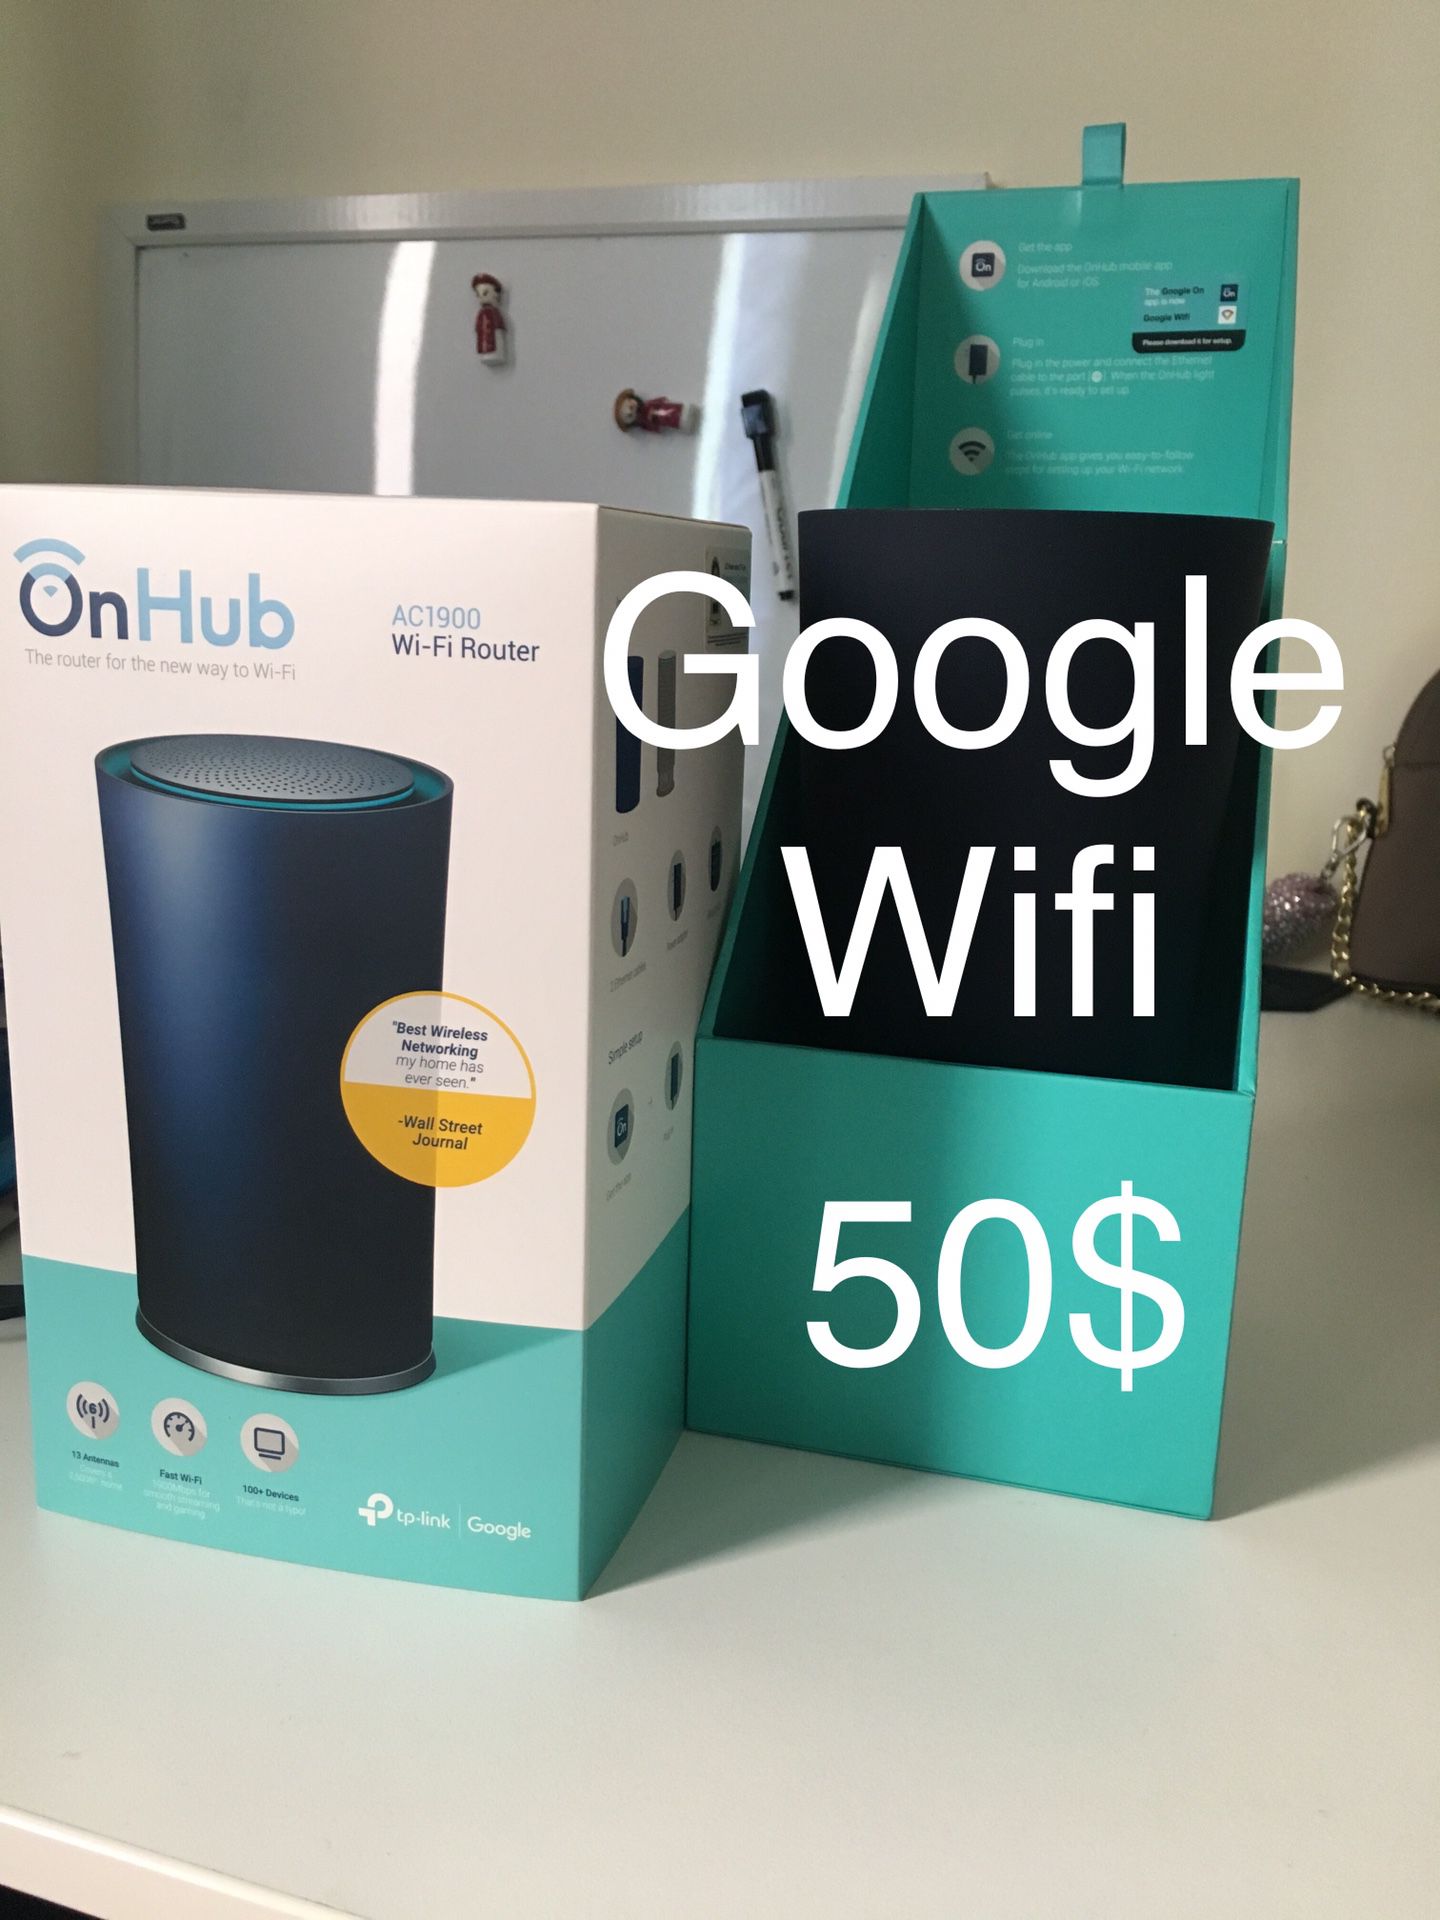 Google TP-Link OnHub WiFi Router AC1900